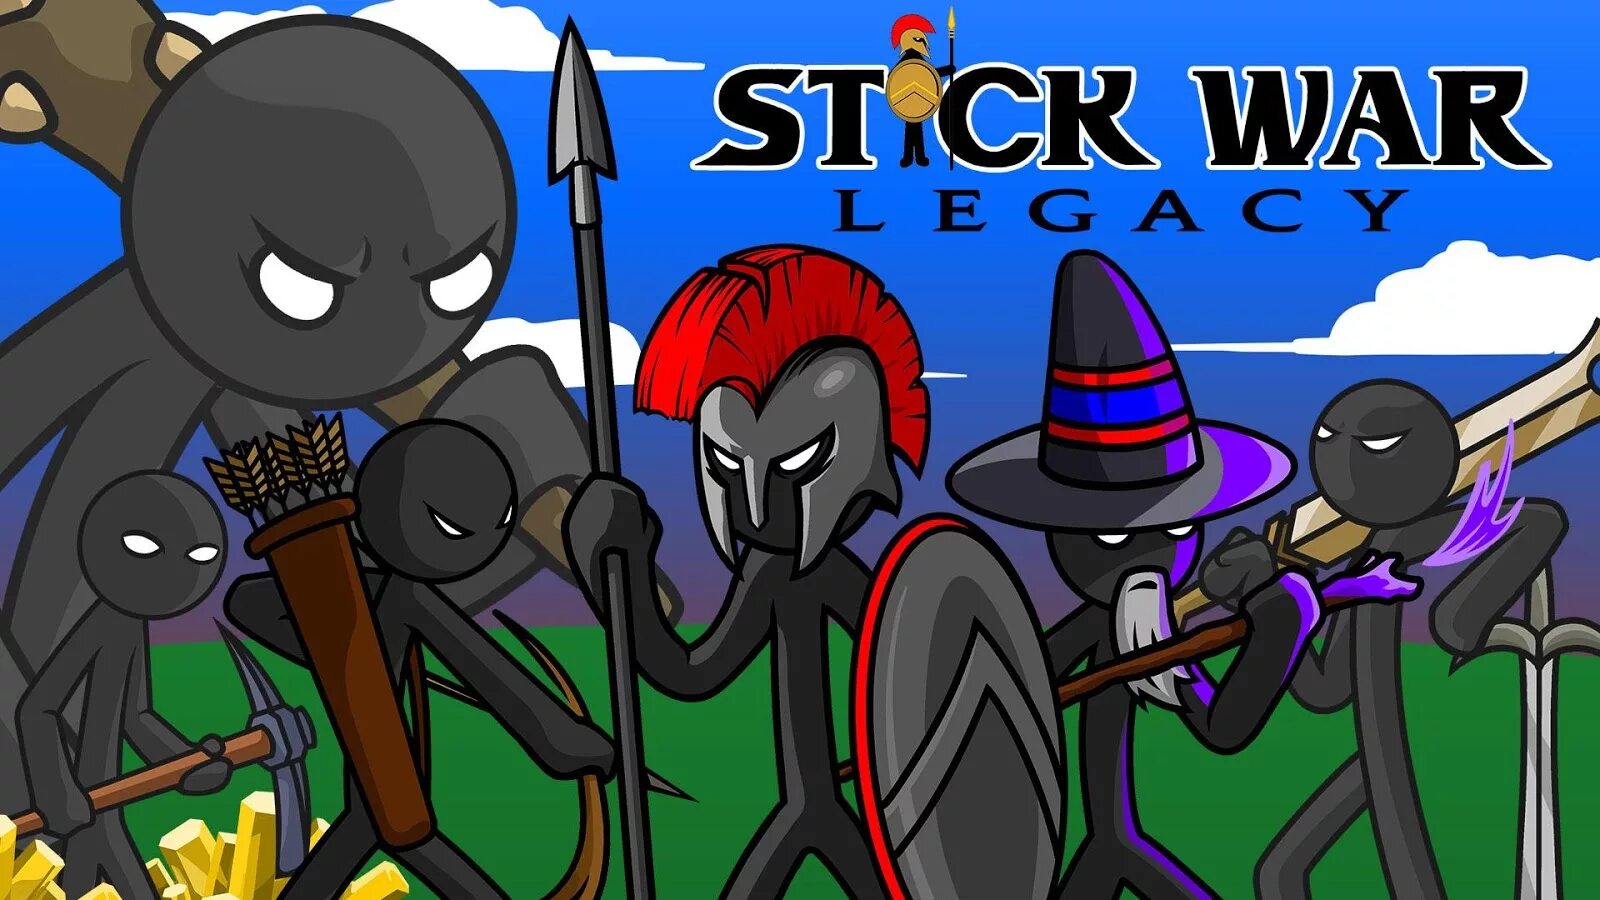 Включи игра человечки. Stick War Legacy лучники. Legacy игра Stickman Legacy. Игра стик вар Legacy. Стик вар Легаси игрушки.